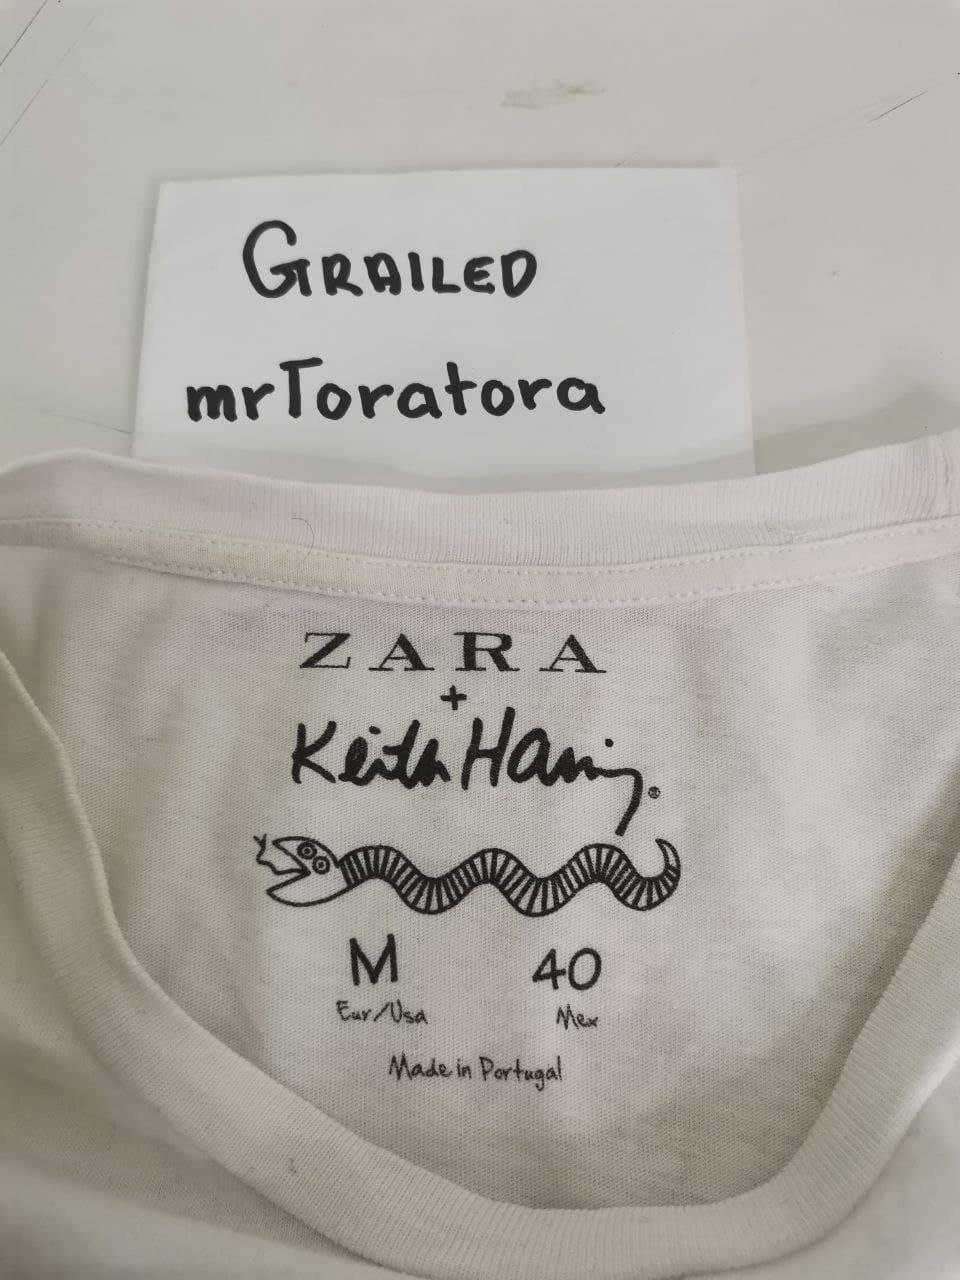 Zara - Zara X Keith Haring Art Rare Design - 6